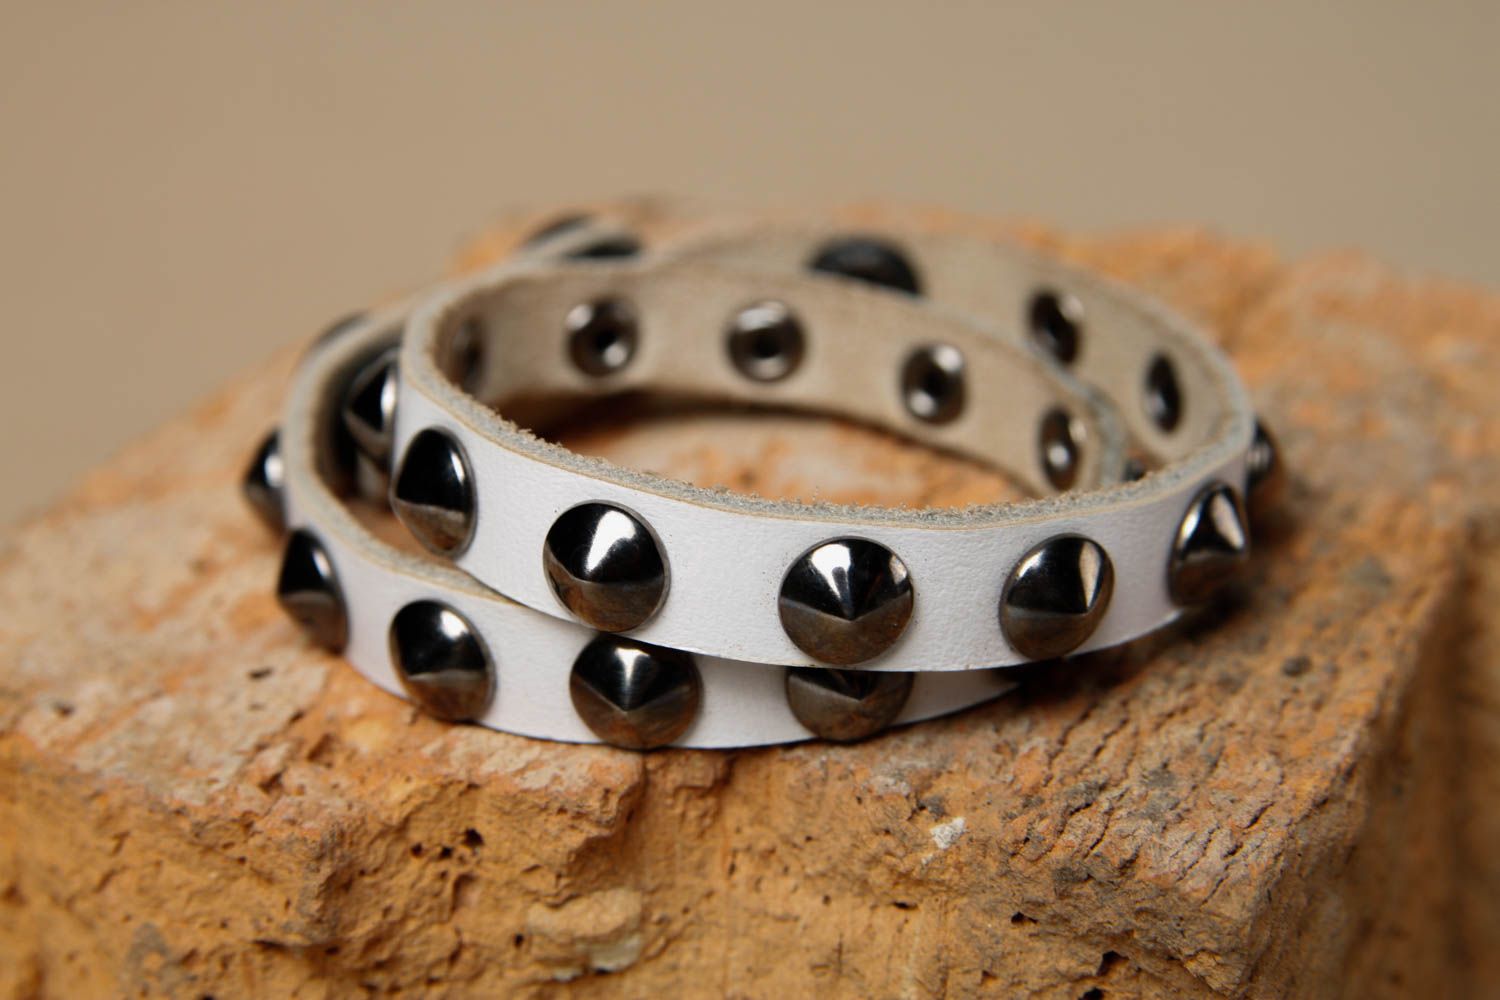 Unusual handmade bracelet designs leather bracelet costume jewelry designs photo 1